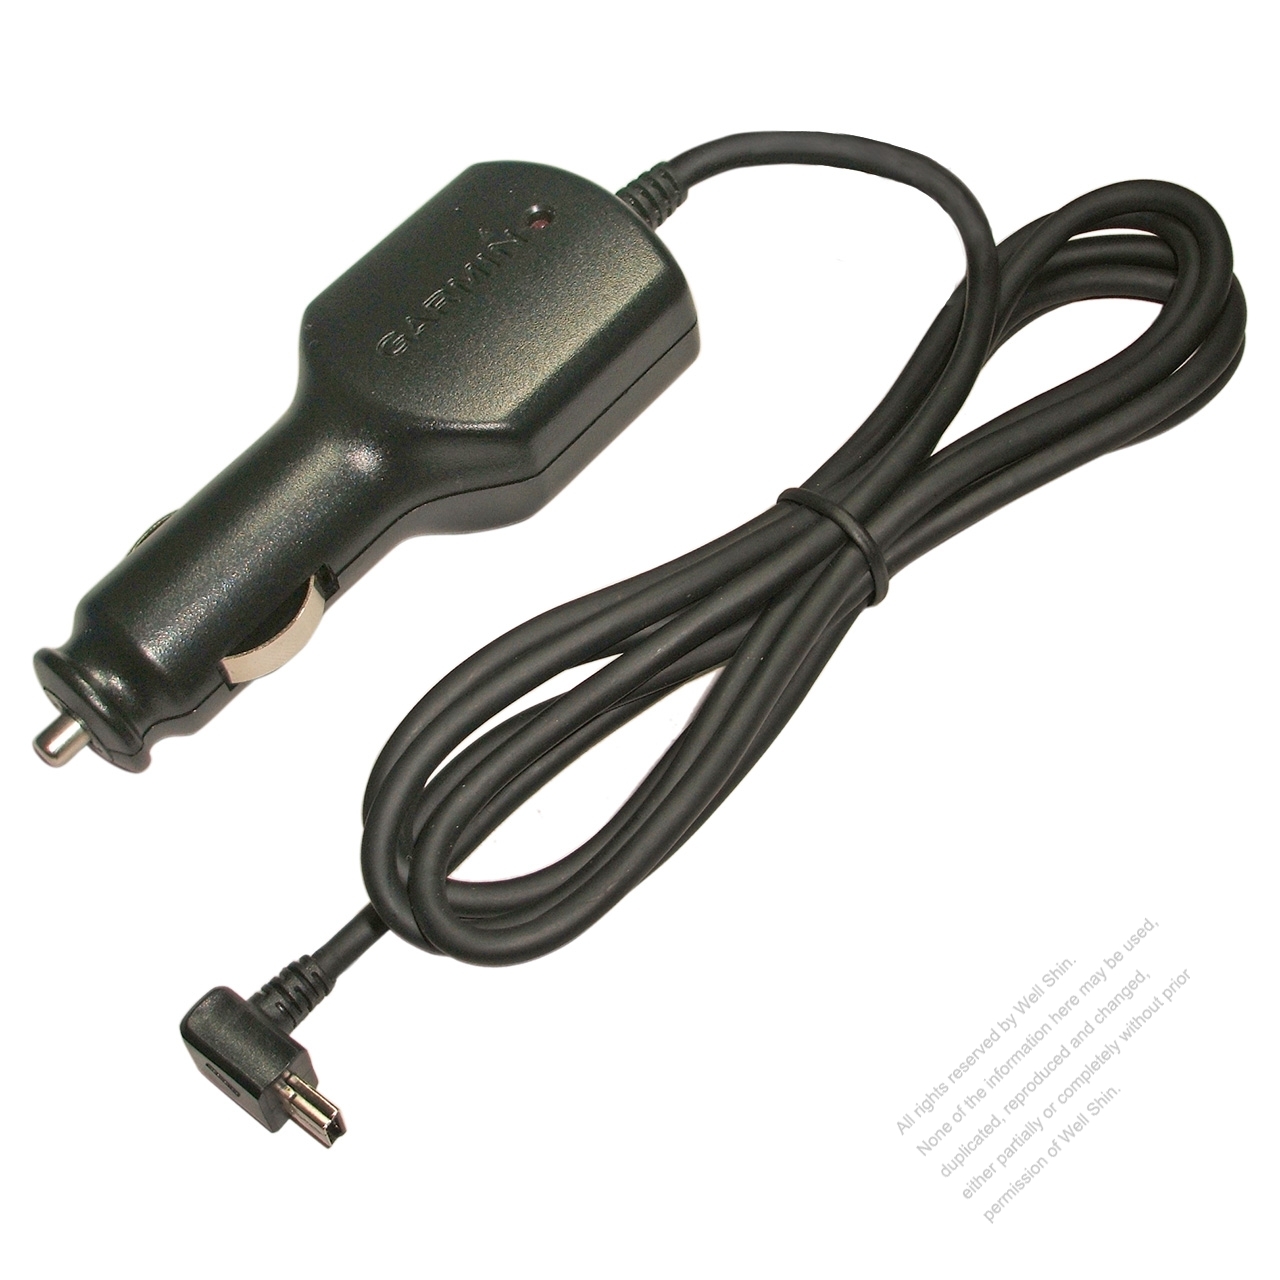 AC/DC 5V 1A USB Charger, USA/ Japan Plug Adapter - Well Shin Technology  Co., Ltd.